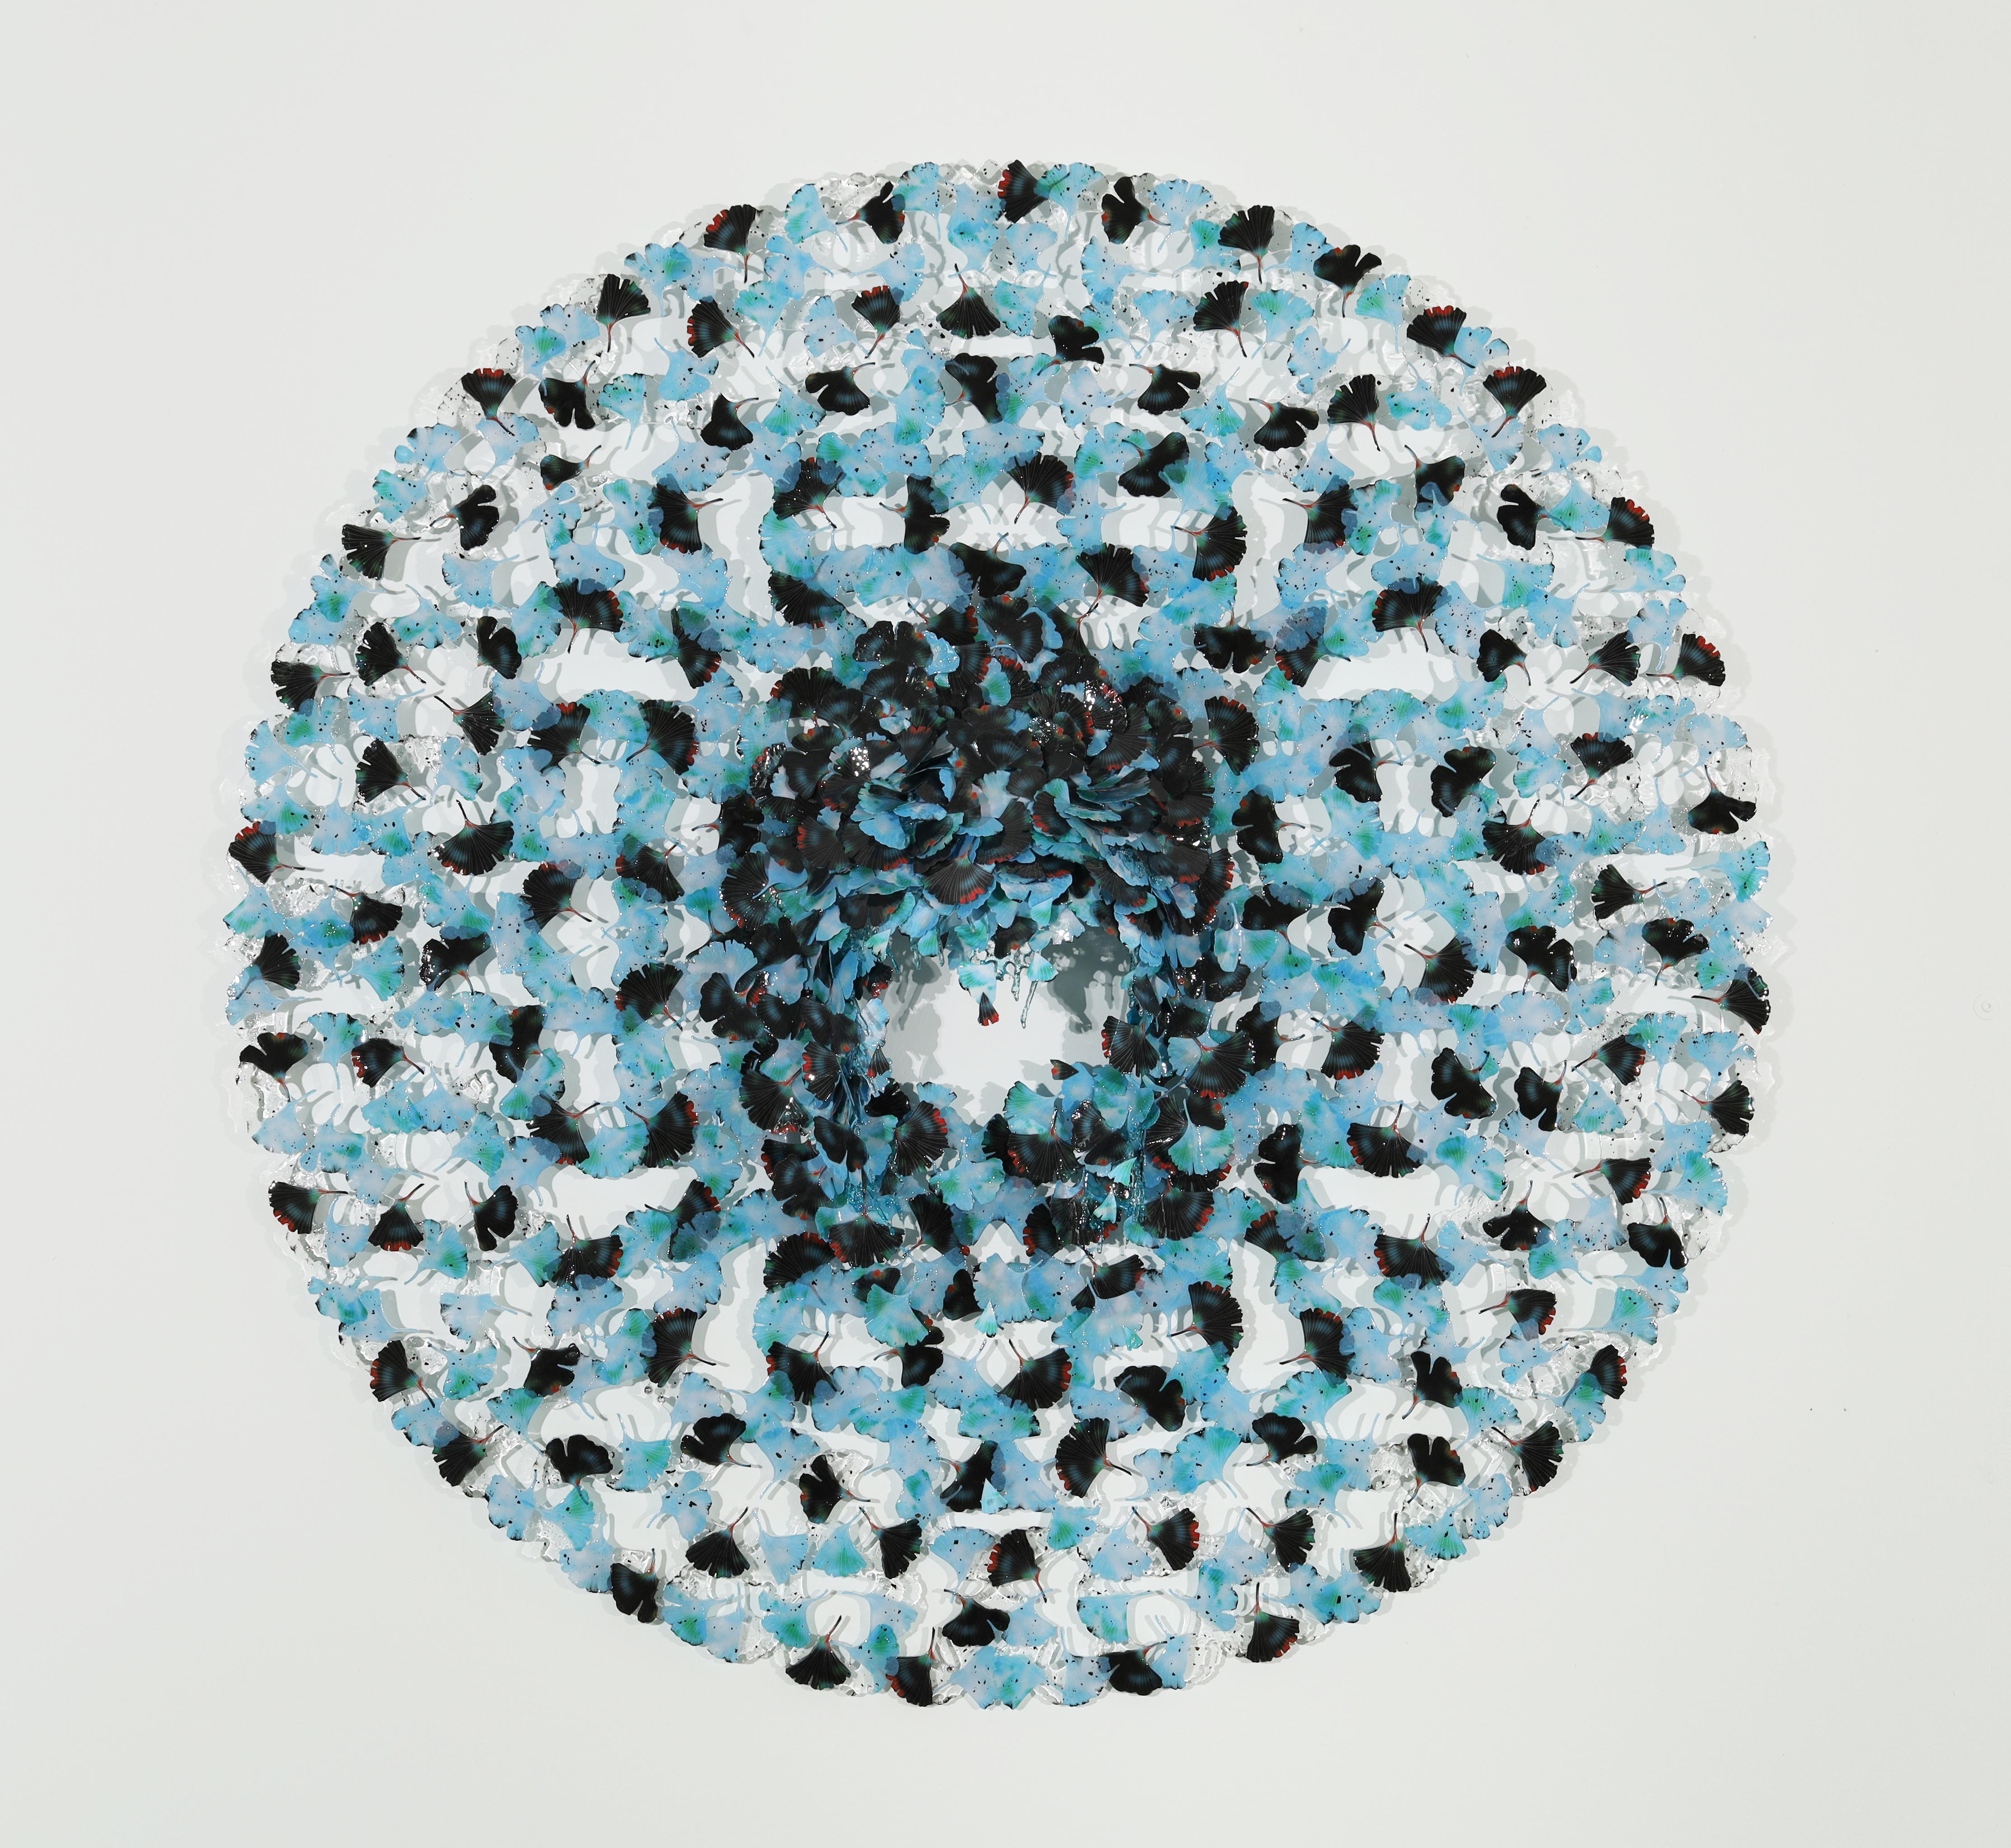 Abstract Sculpture Annalù - Cravate de rêve, bulle bleue Ginkgo 